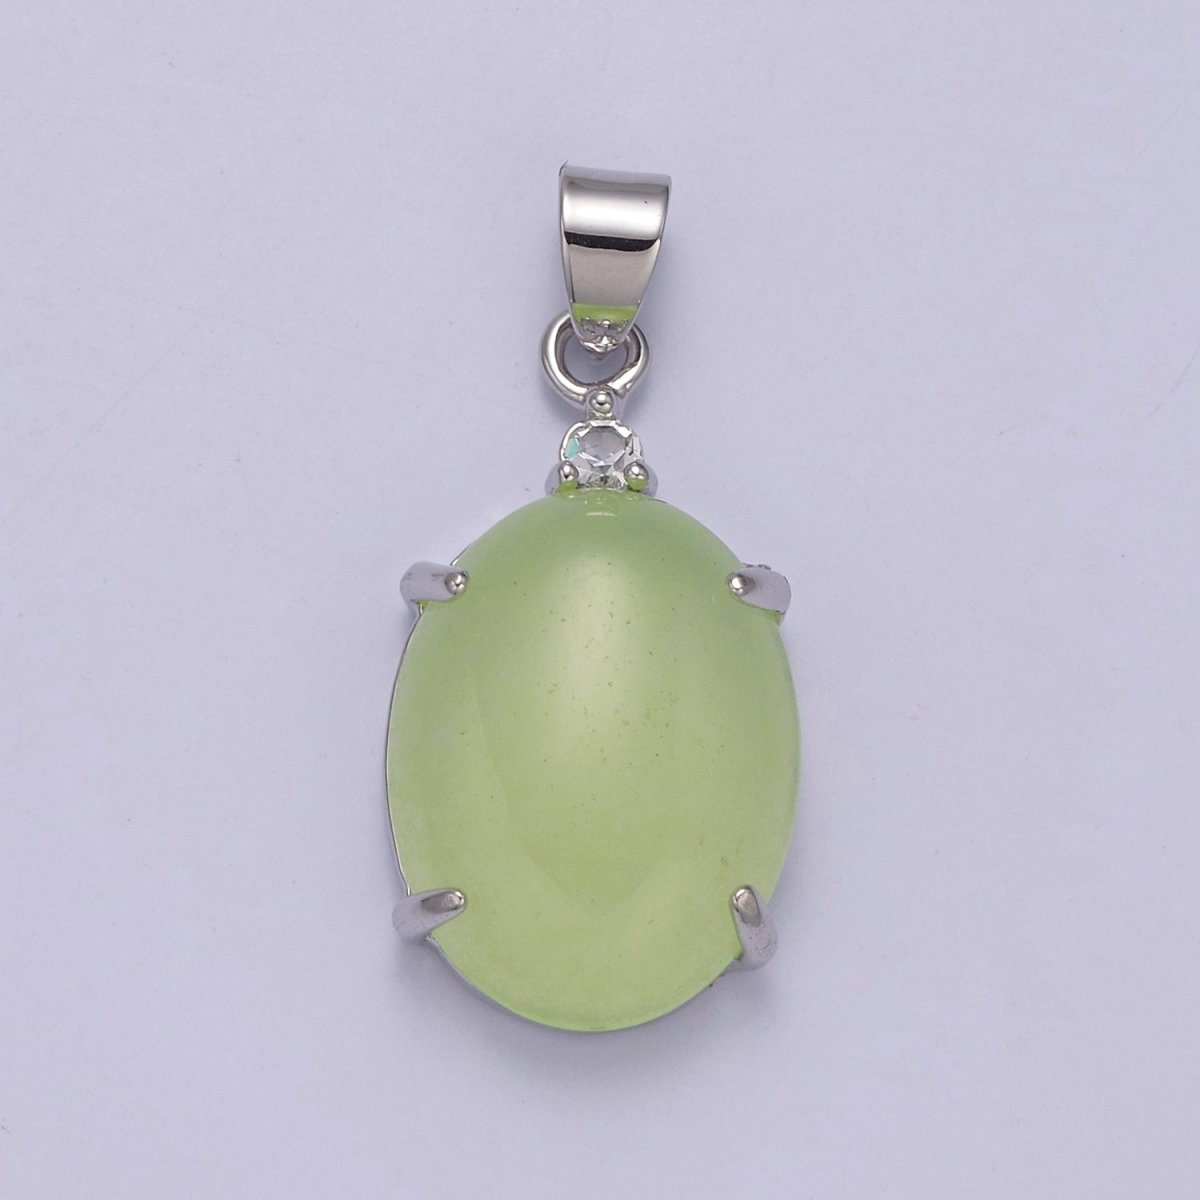 Minimalist Green Oval Lucky jade pendant Charm for Necklace W-643 W-644 - DLUXCA